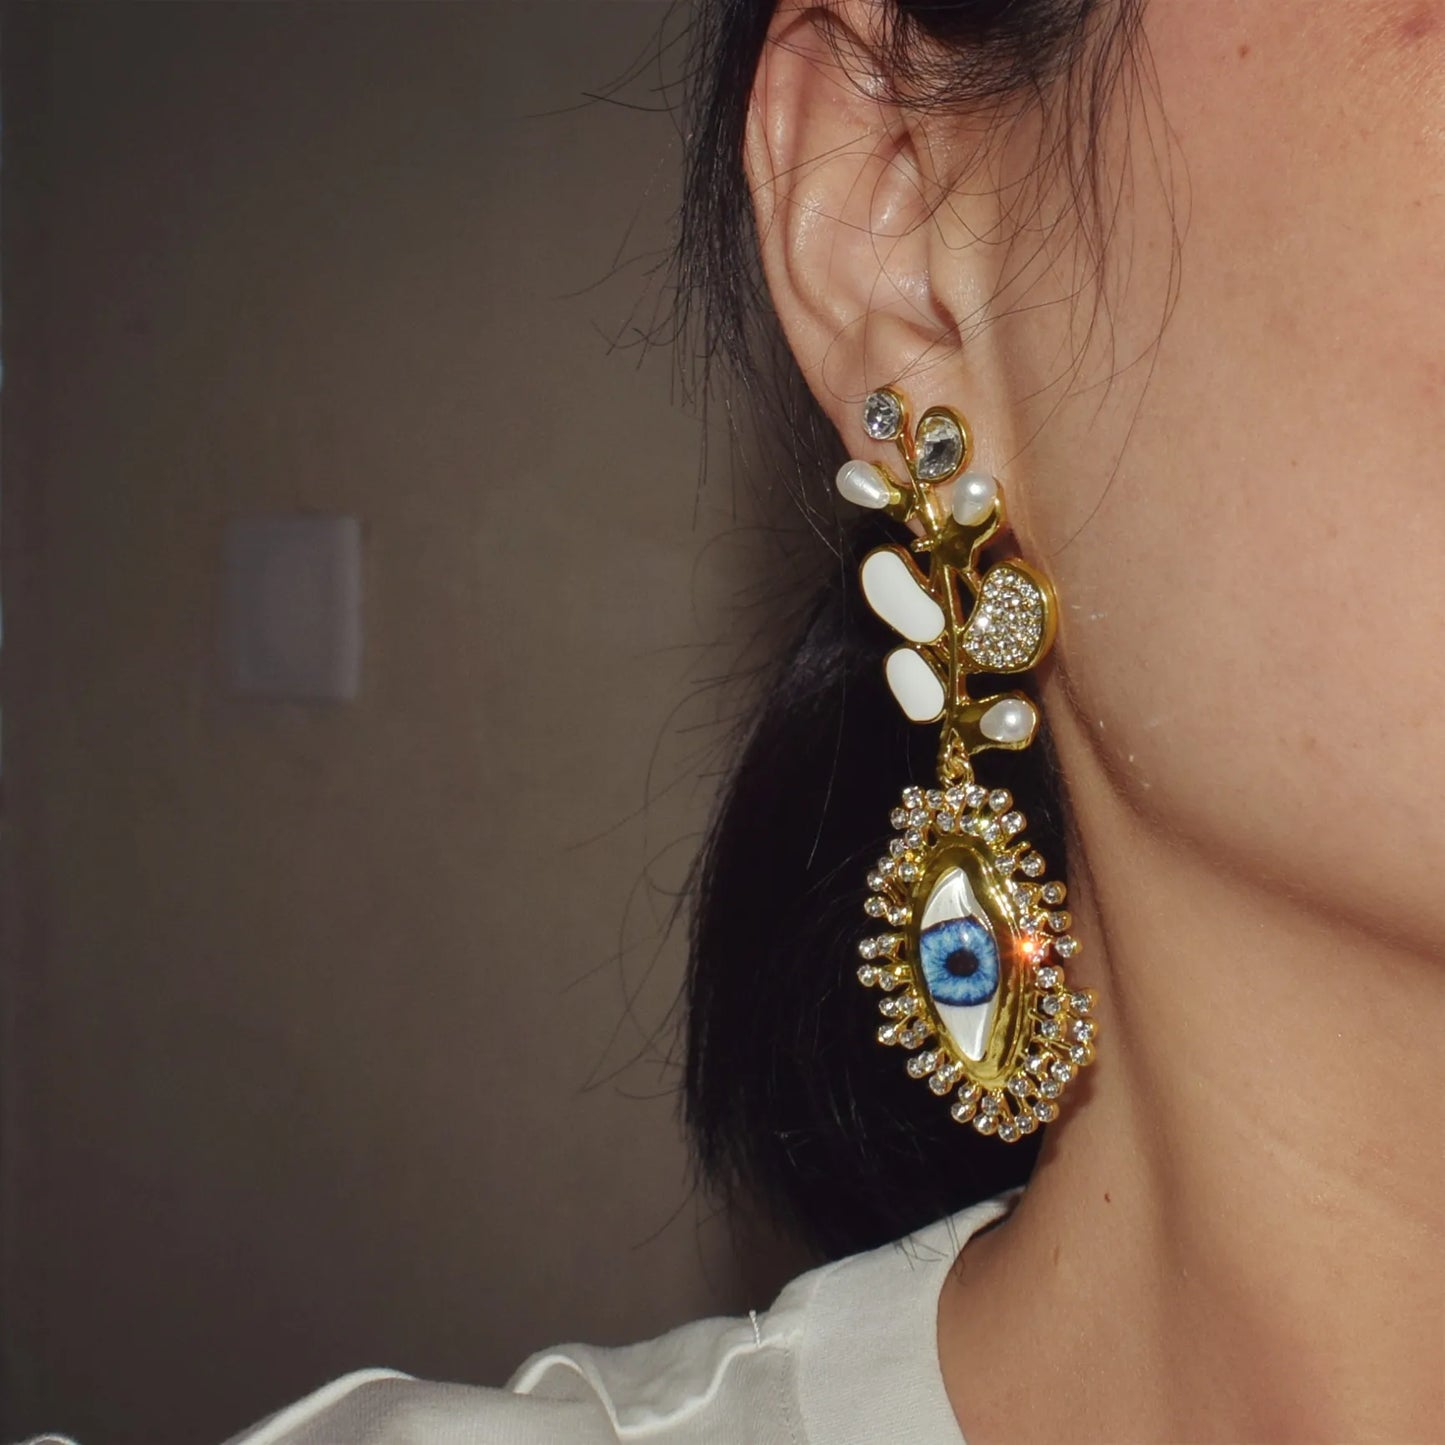 Schiaparelli Style Evil Eyes Pendant Dangle Earrings Baroque Style